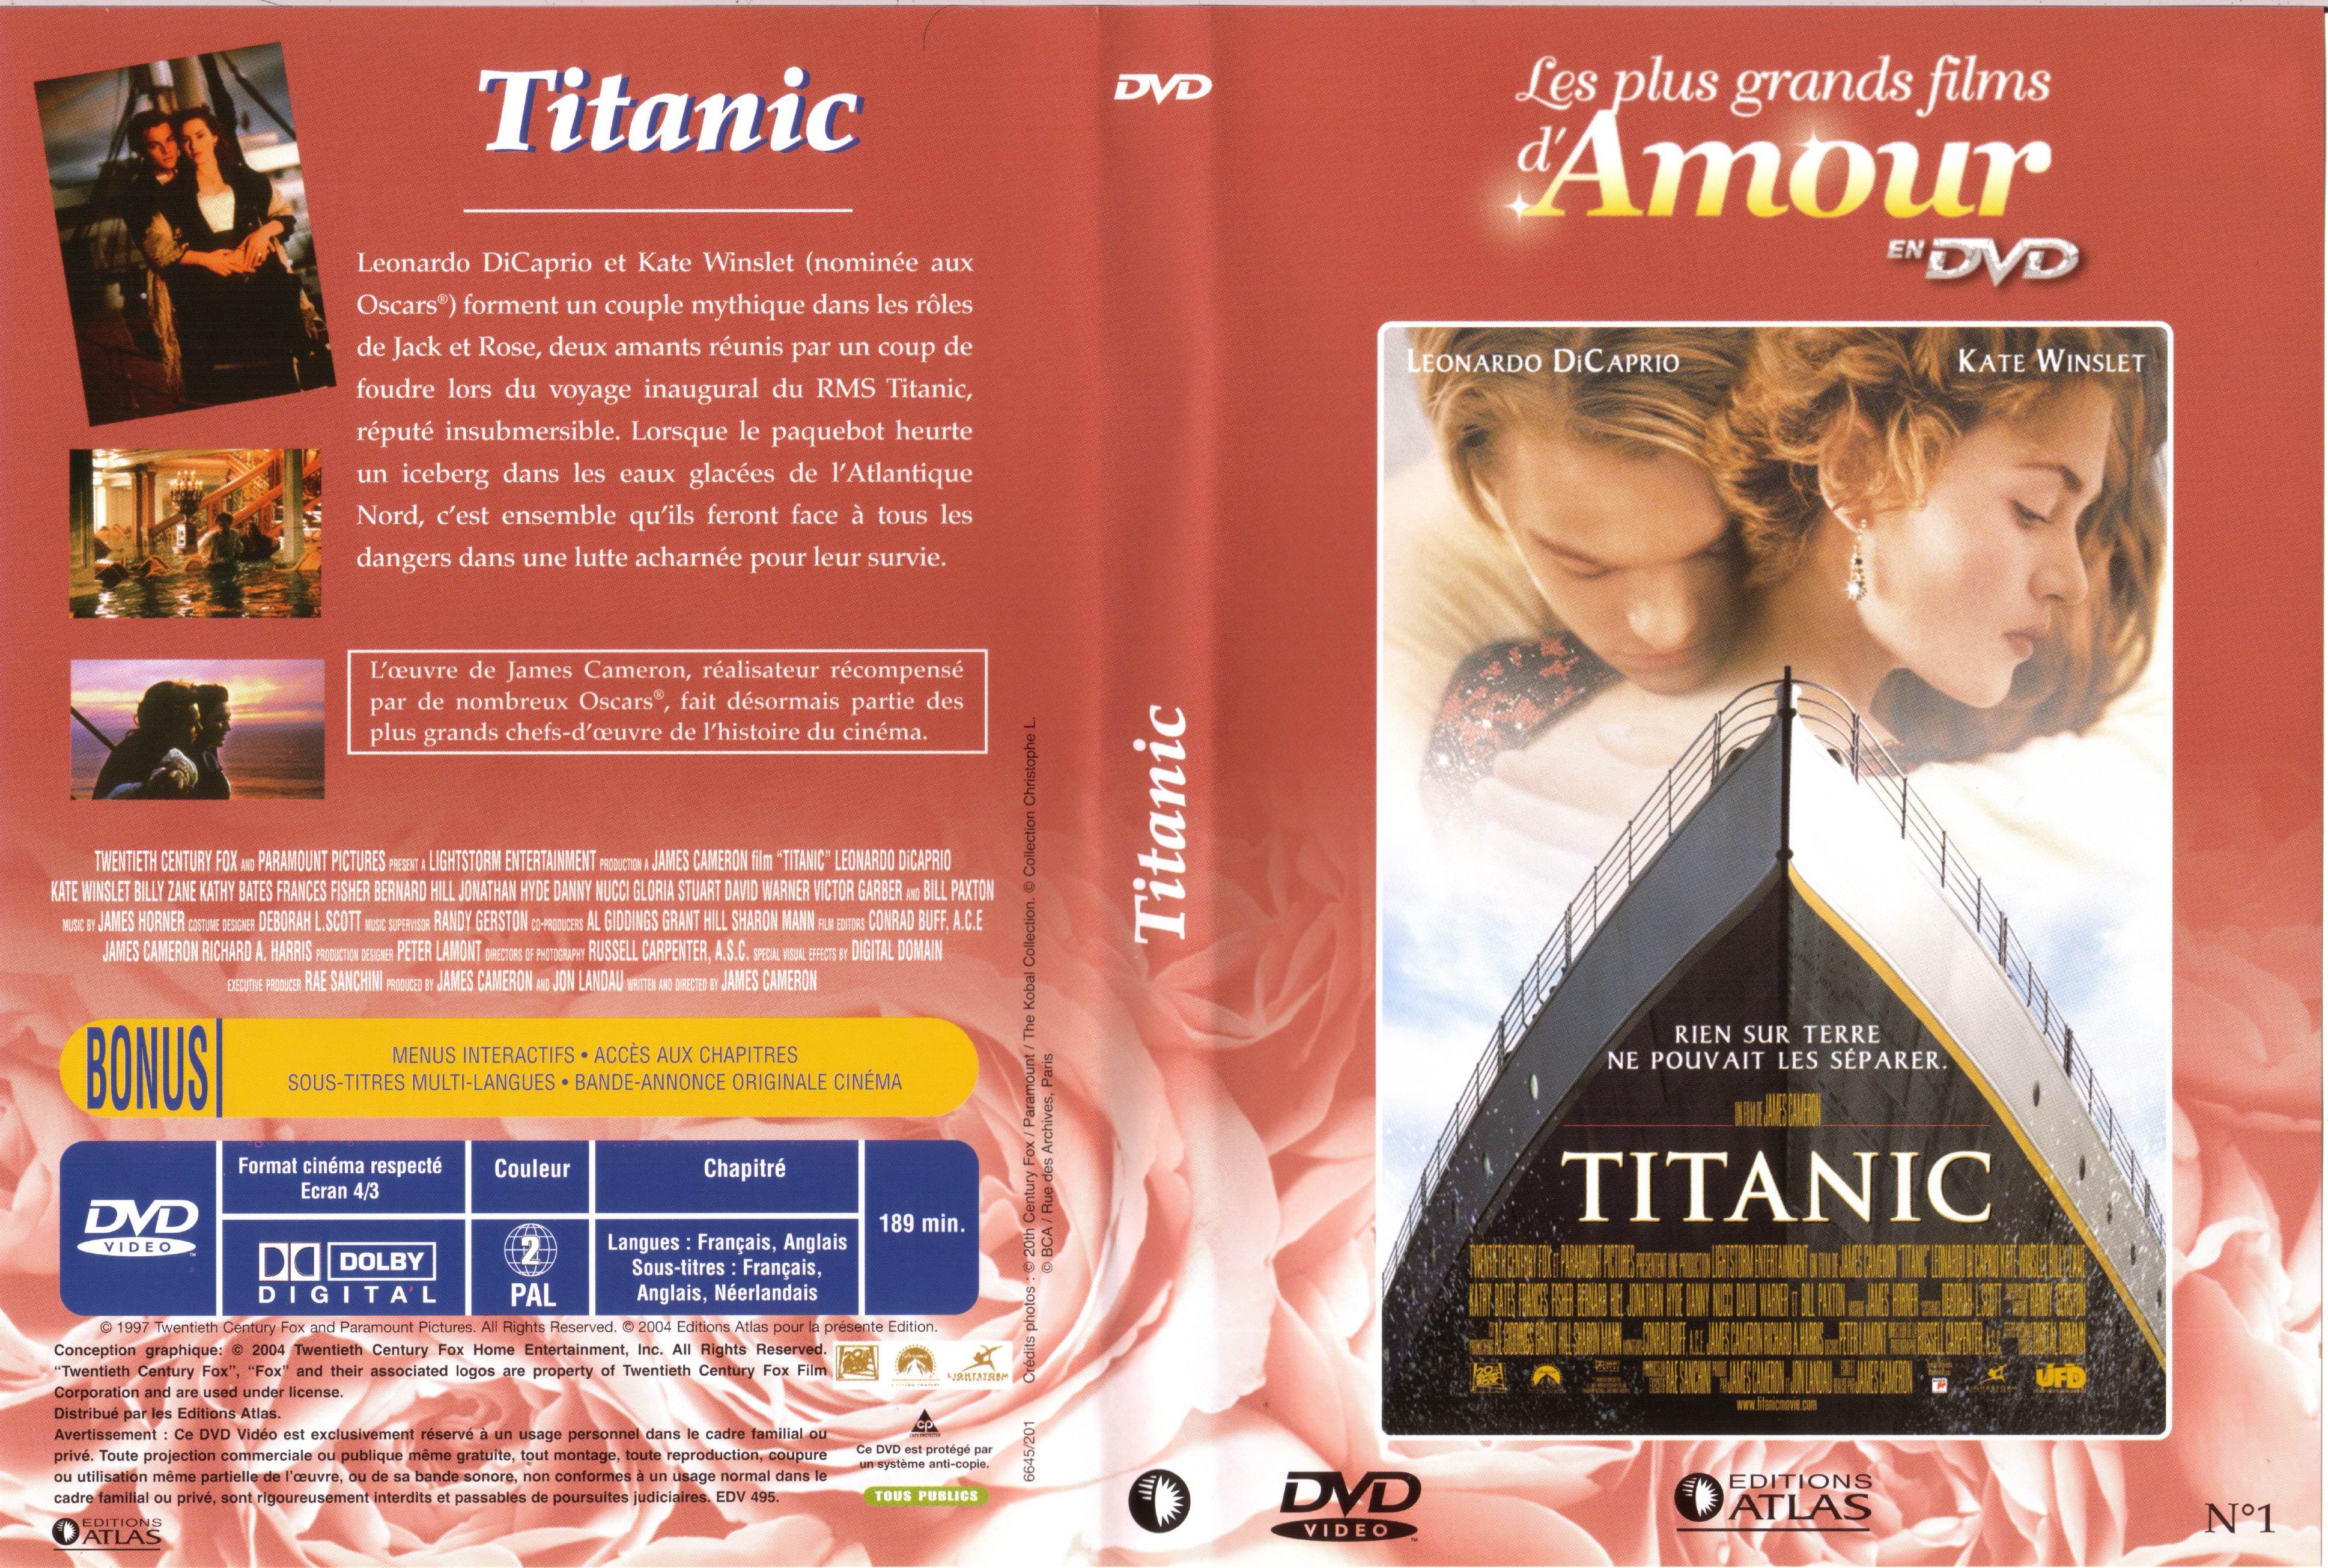 Jaquette DVD Titanic v2